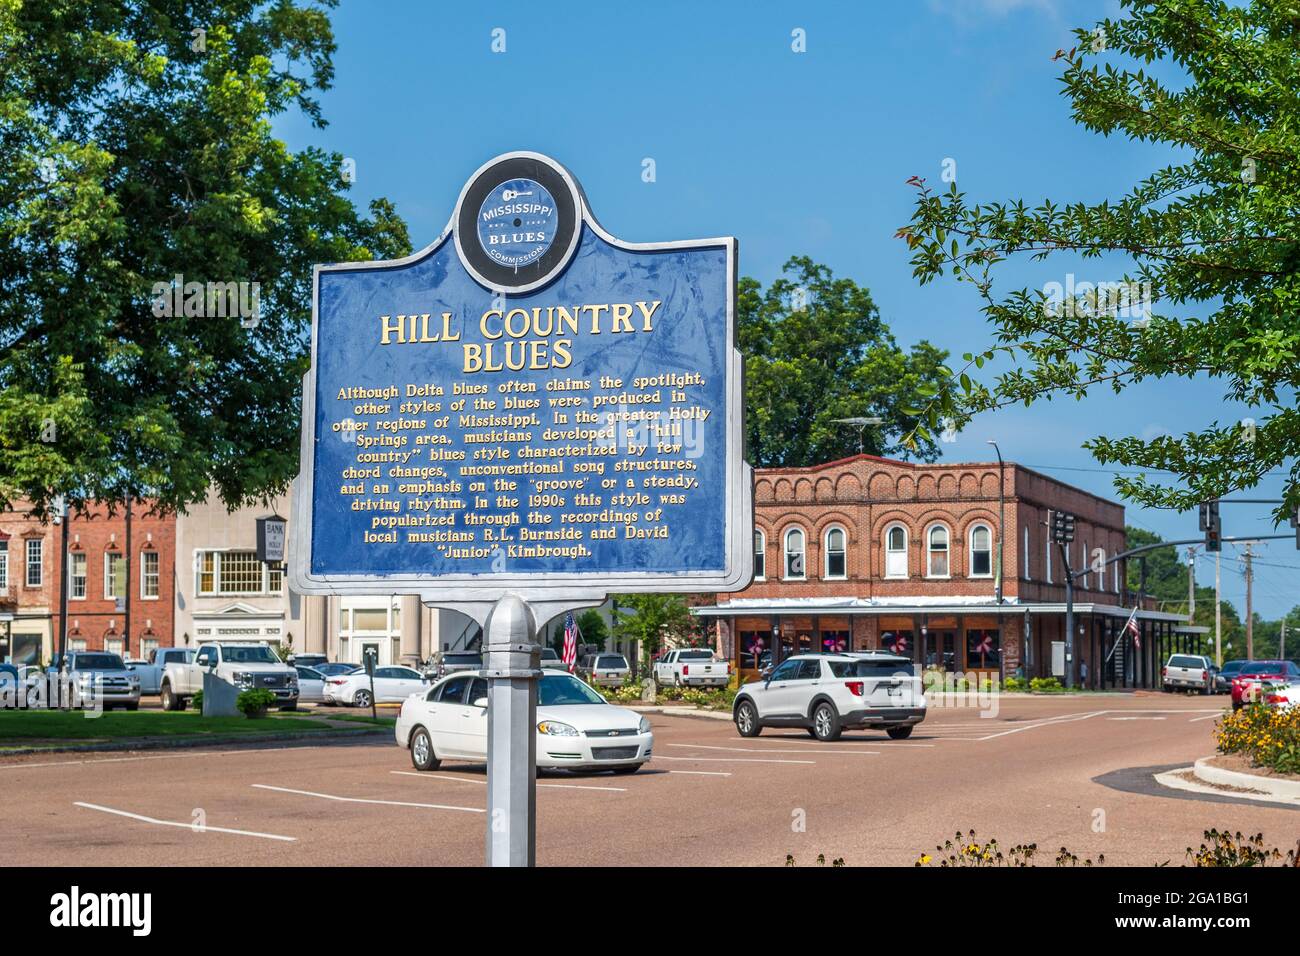 Holly Springs, Mississippi Historic Downtown Square et panneau Blues Trail honorant Hill Country Blues, R.L. Burnside et David Junior Kimbrough. Banque D'Images